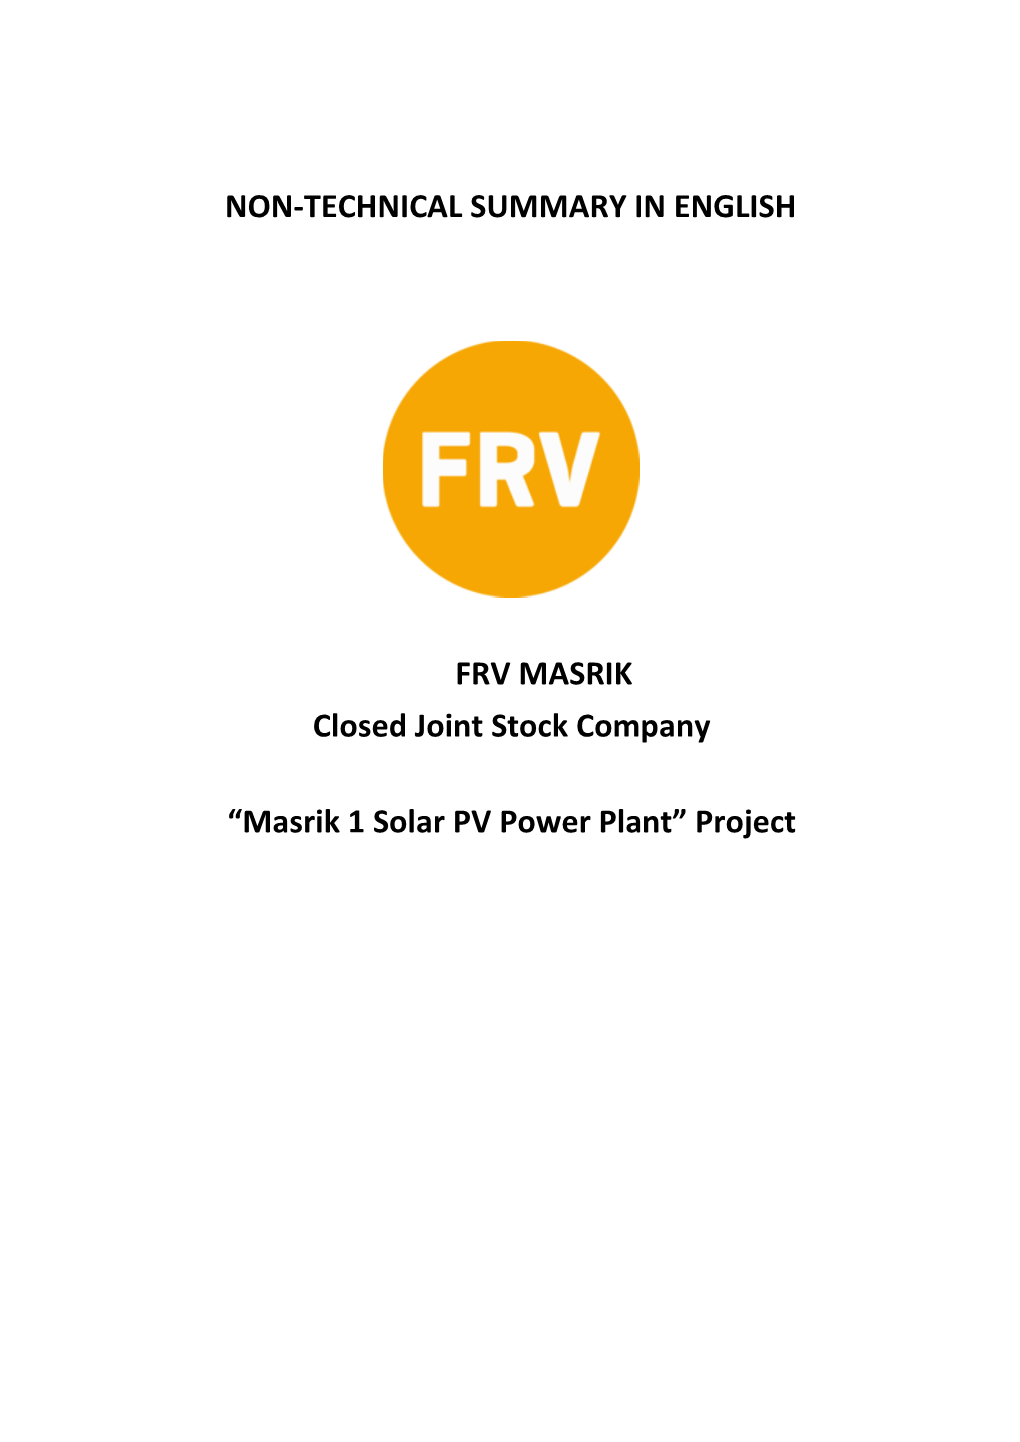 Masrik 1 Solar PV Power Plant” Project